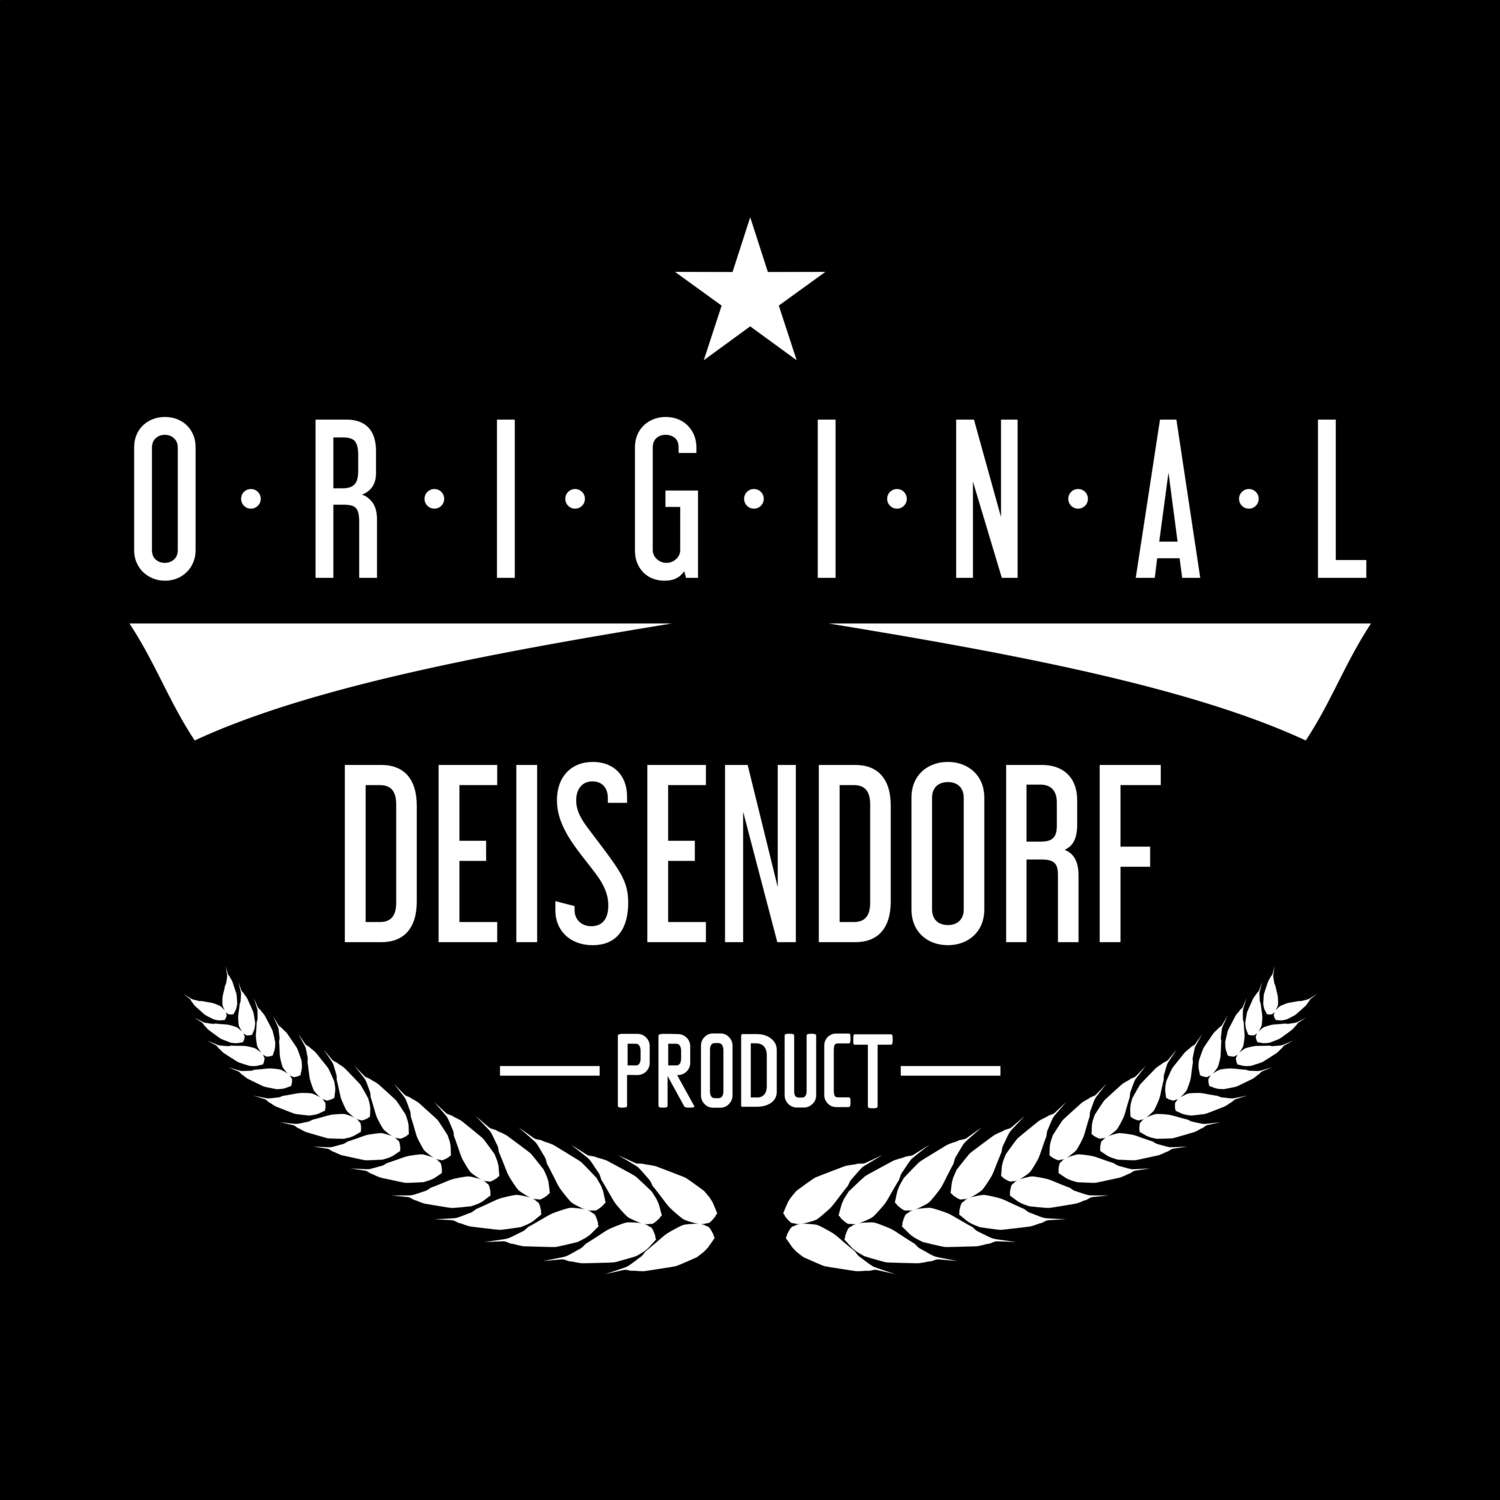 Deisendorf T-Shirt »Original Product«